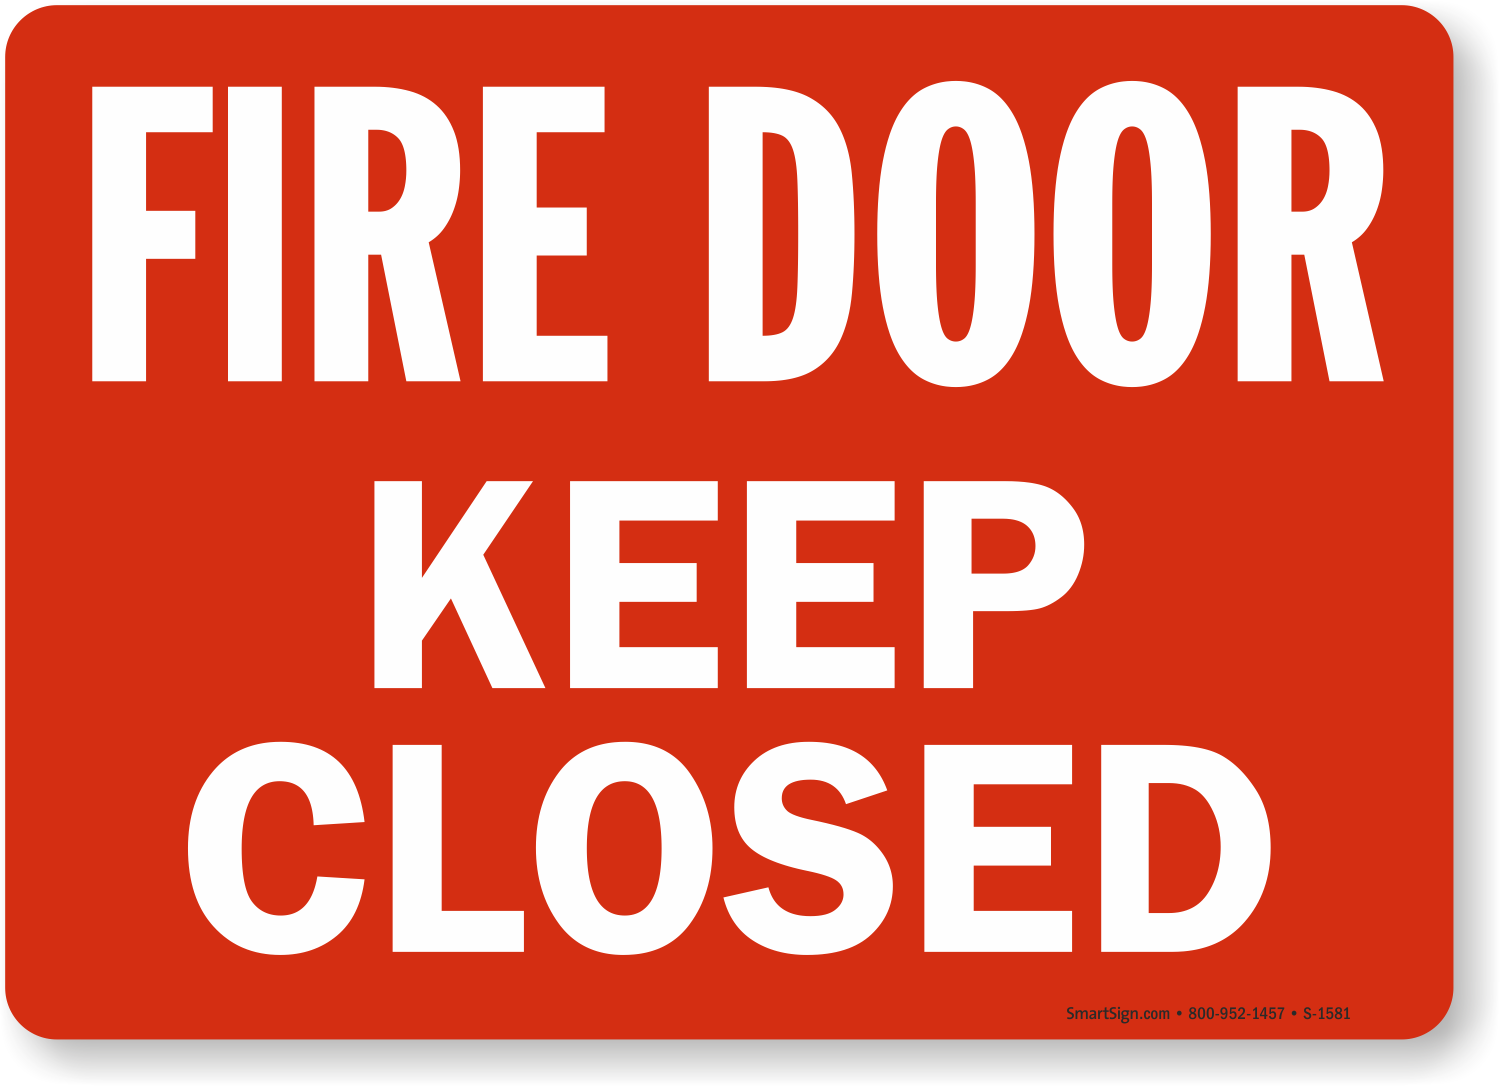 Fire Door Keep Closed Sign, Red, SKU: S-1581